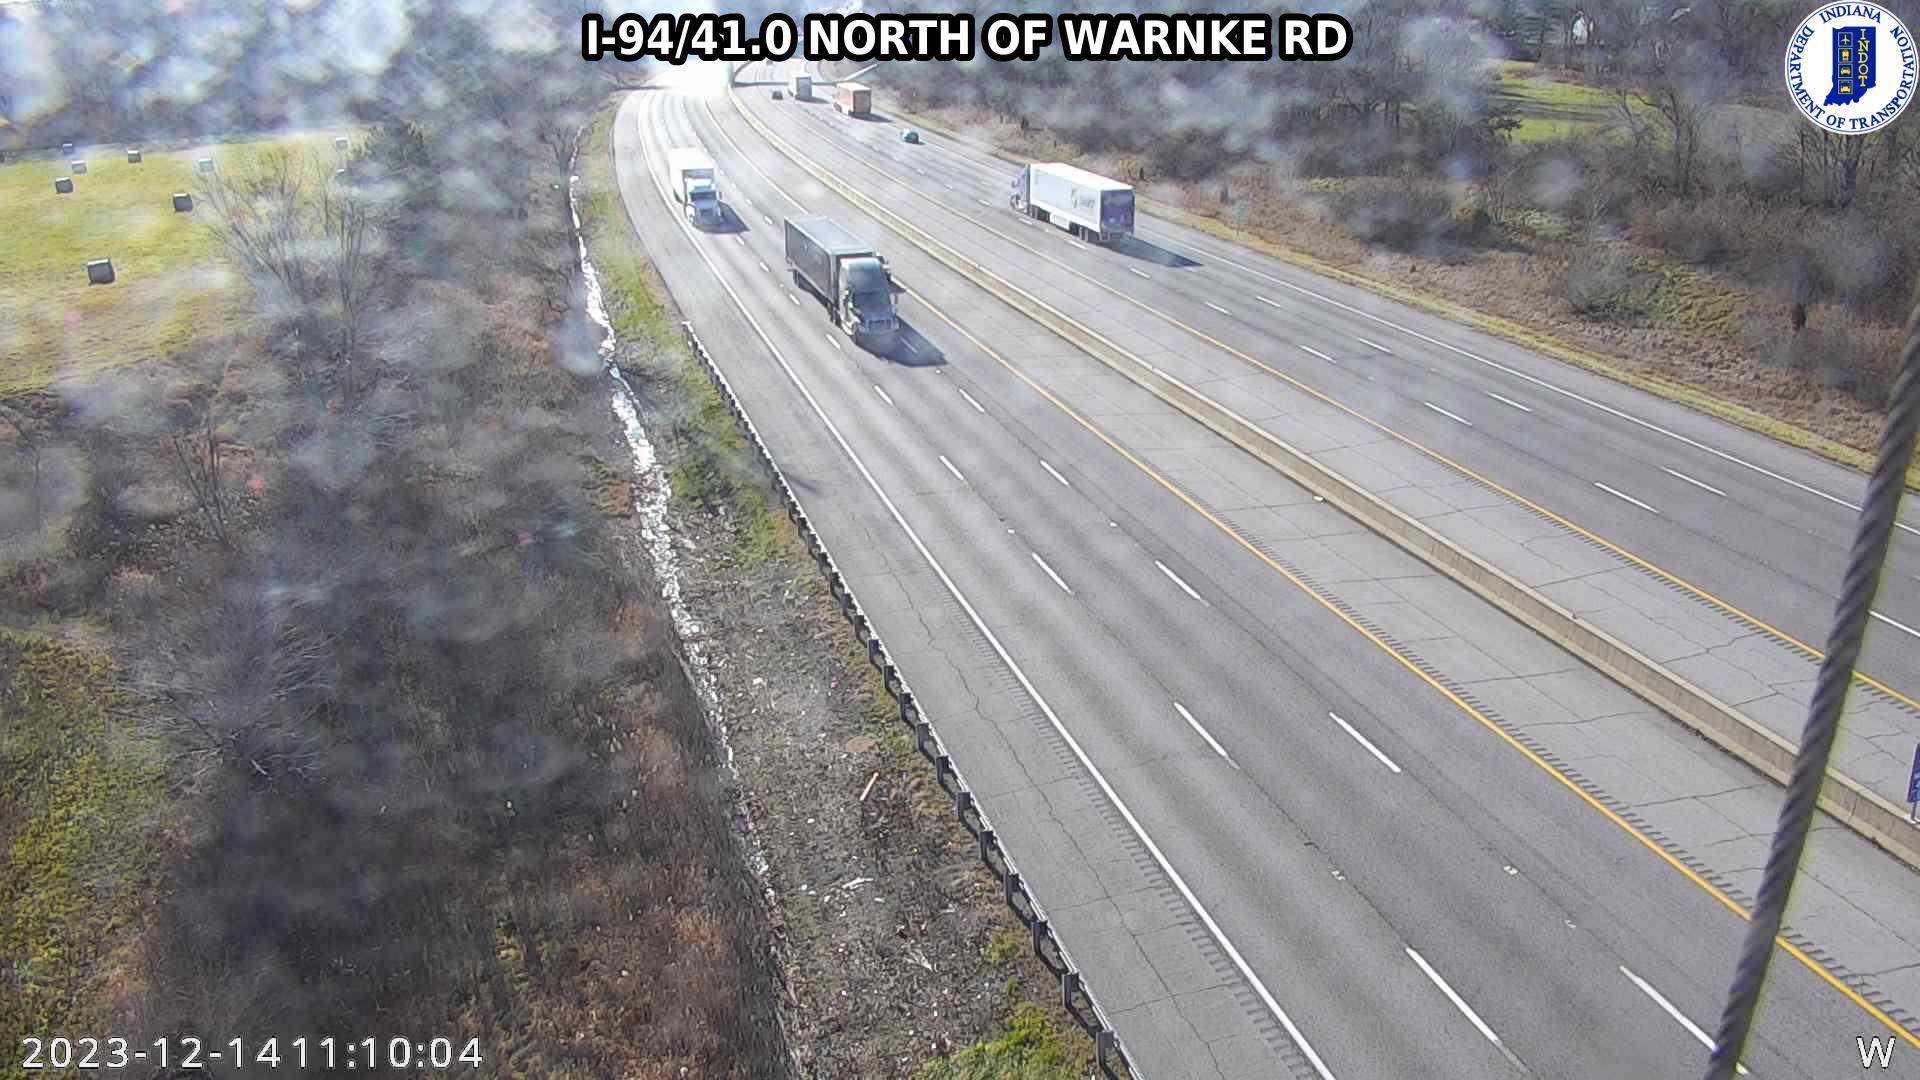 Traffic Cam Ambler: I-94: I-94/41.0 NORTH OF WARNKE RD: I-94/41.0 NORTH OF WARNKE RD